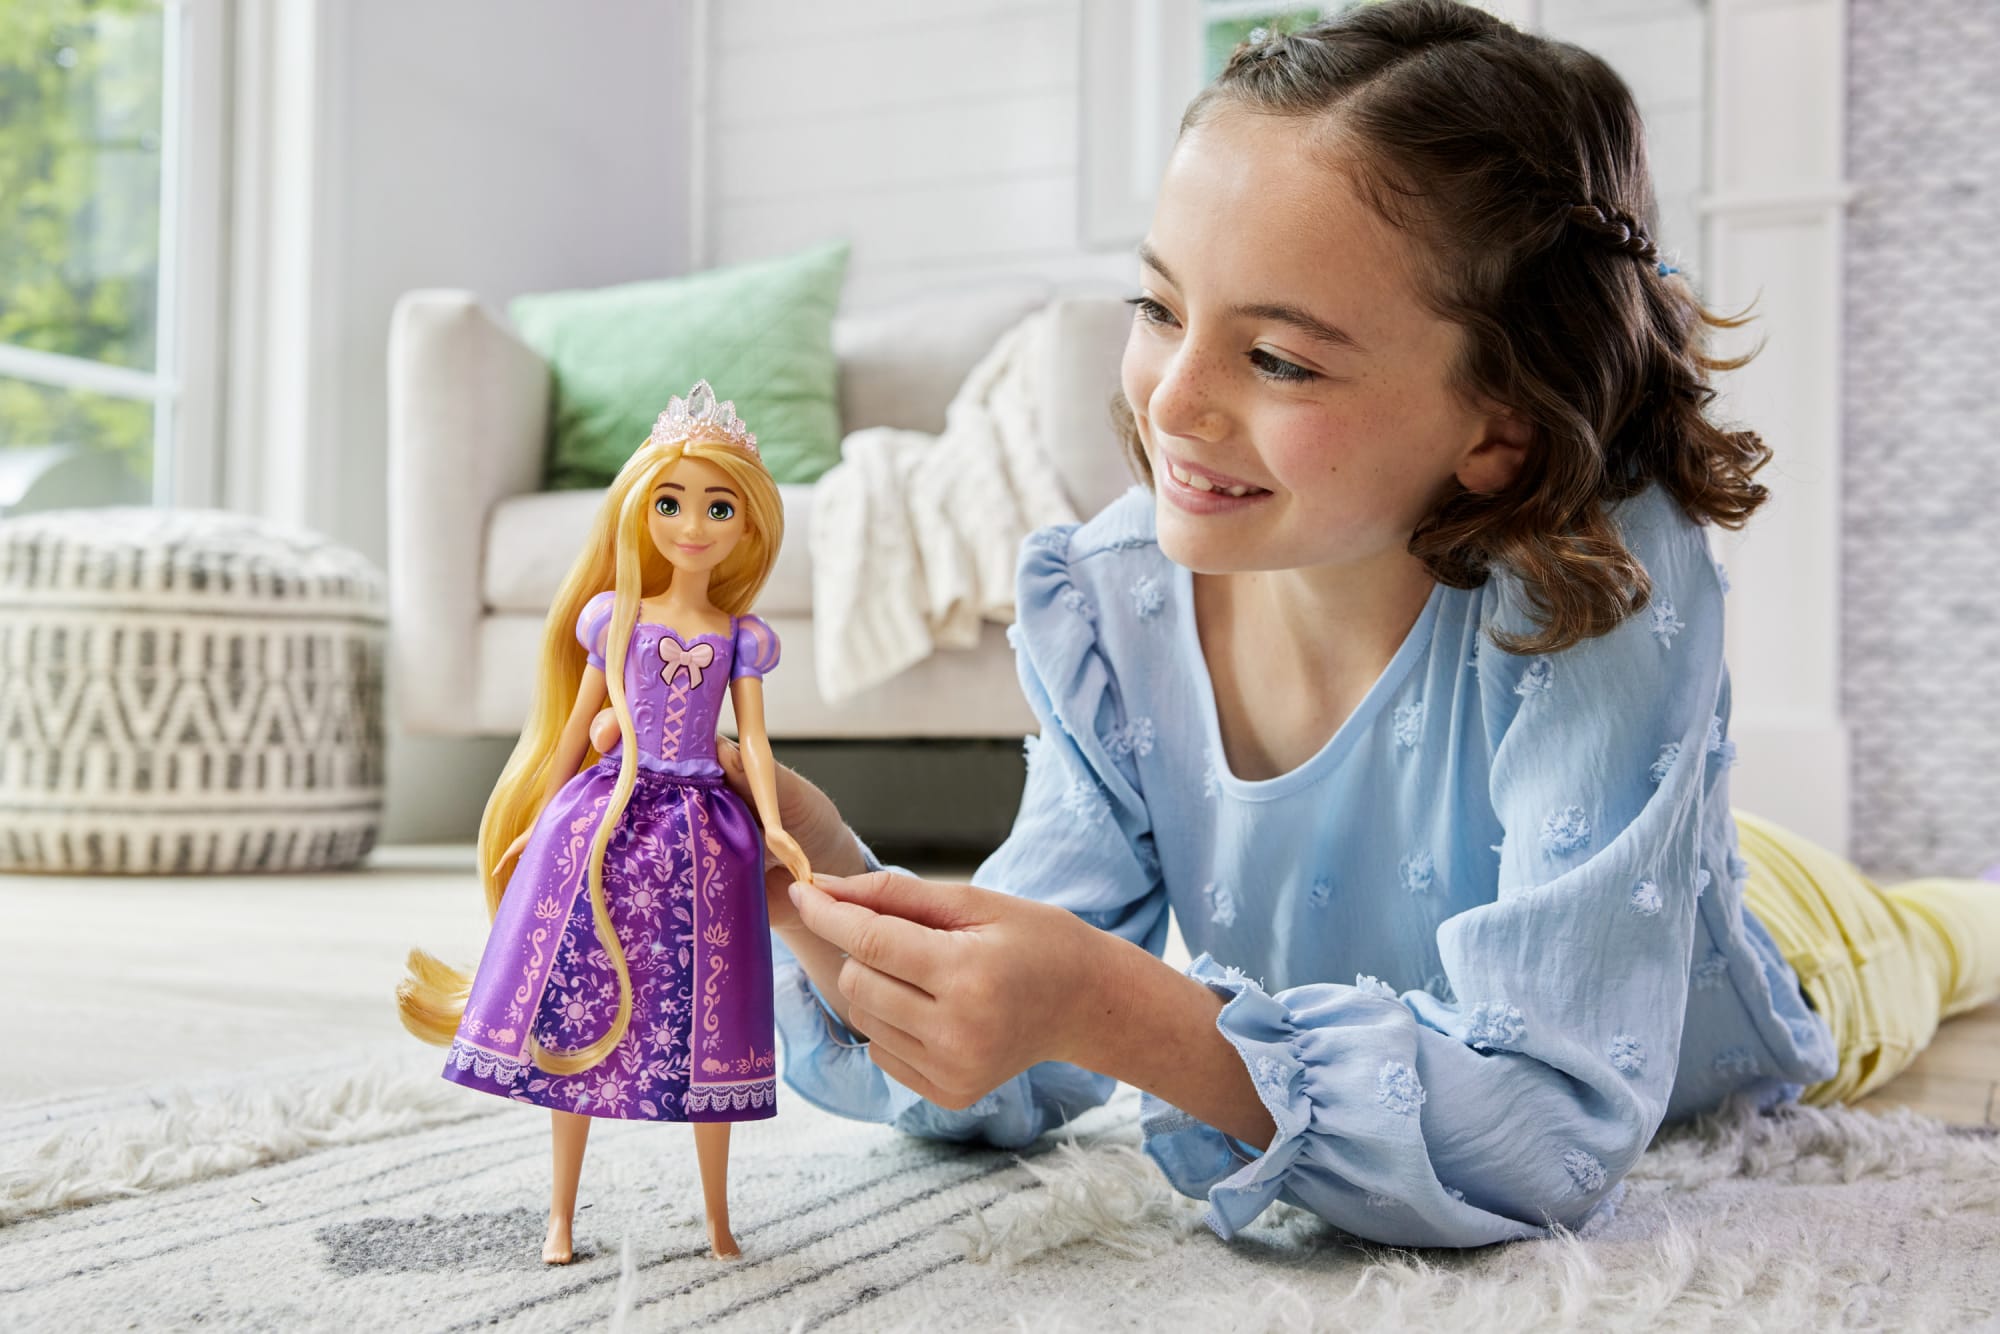 Disney Princess Toys, Singing Rapunzel Doll